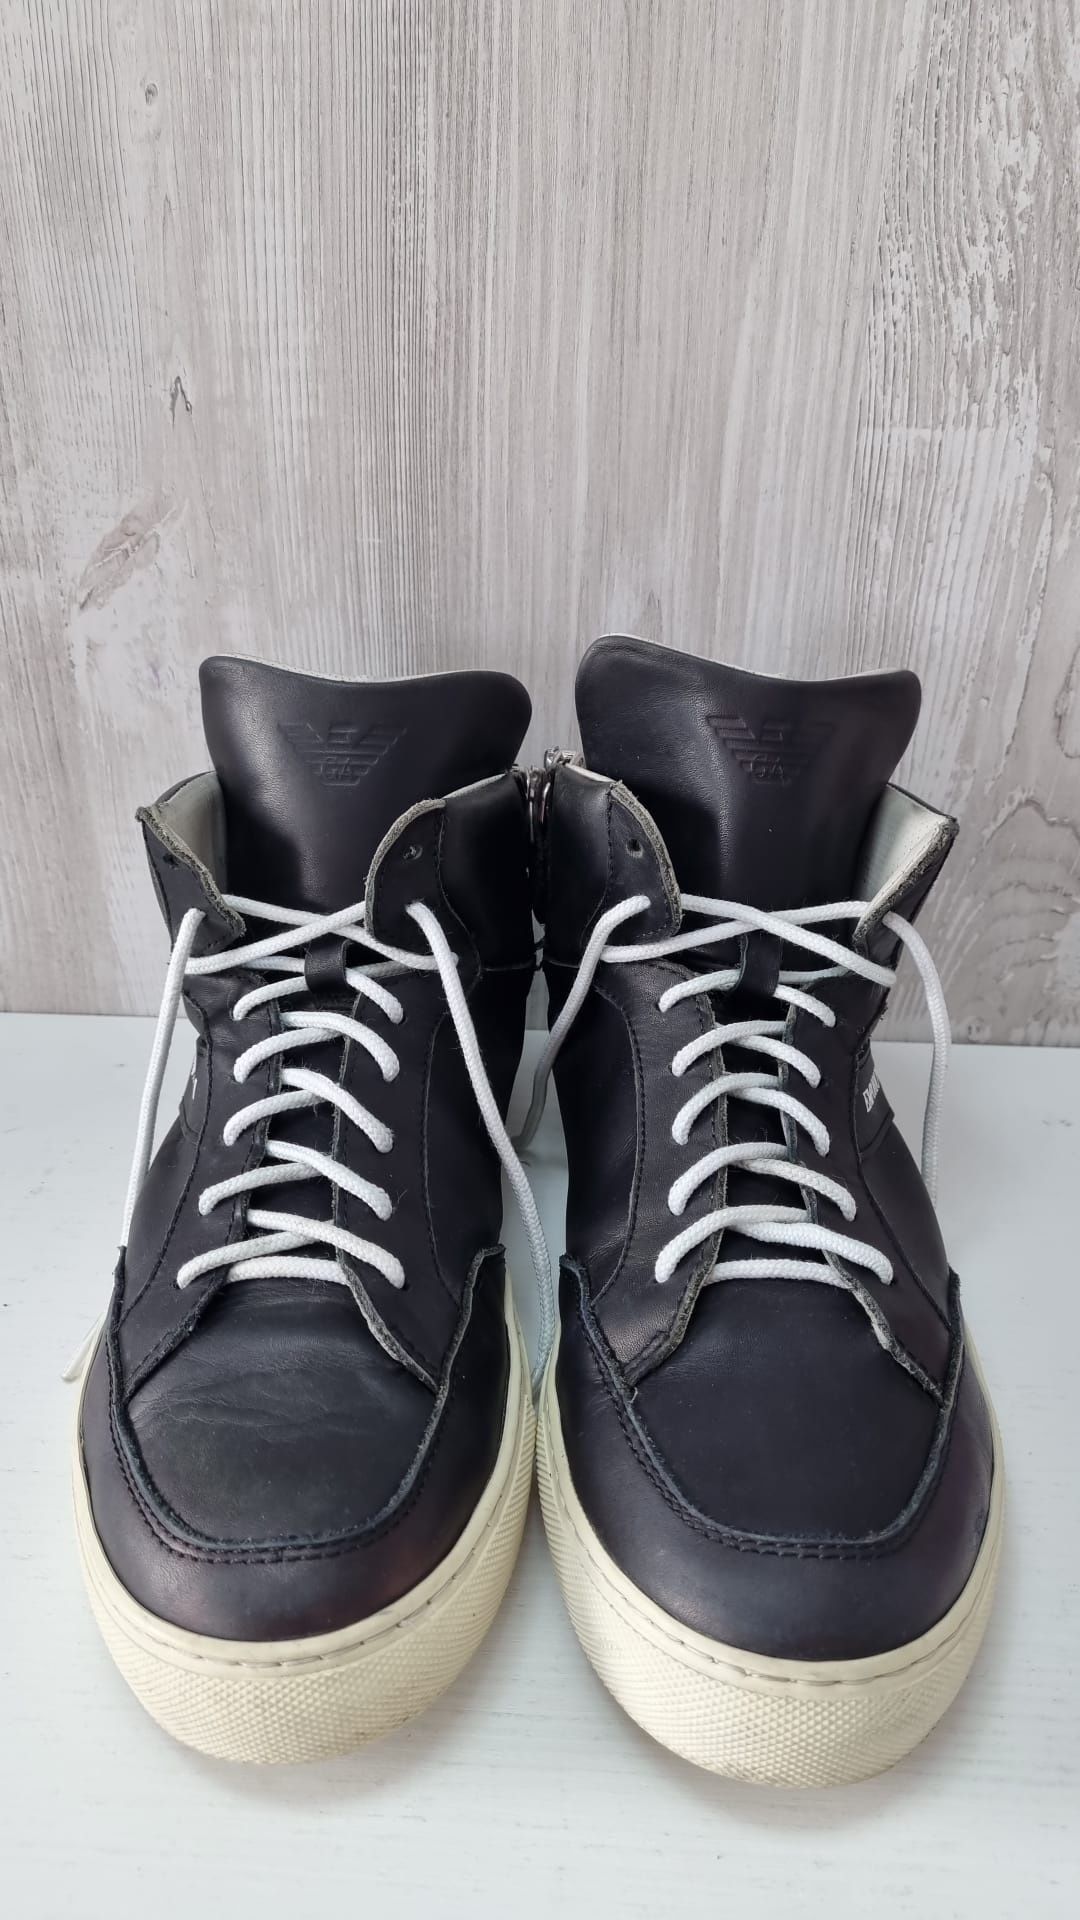 Emporio Armani High Leather Sneakers mărime 42.5 (7 1/2)